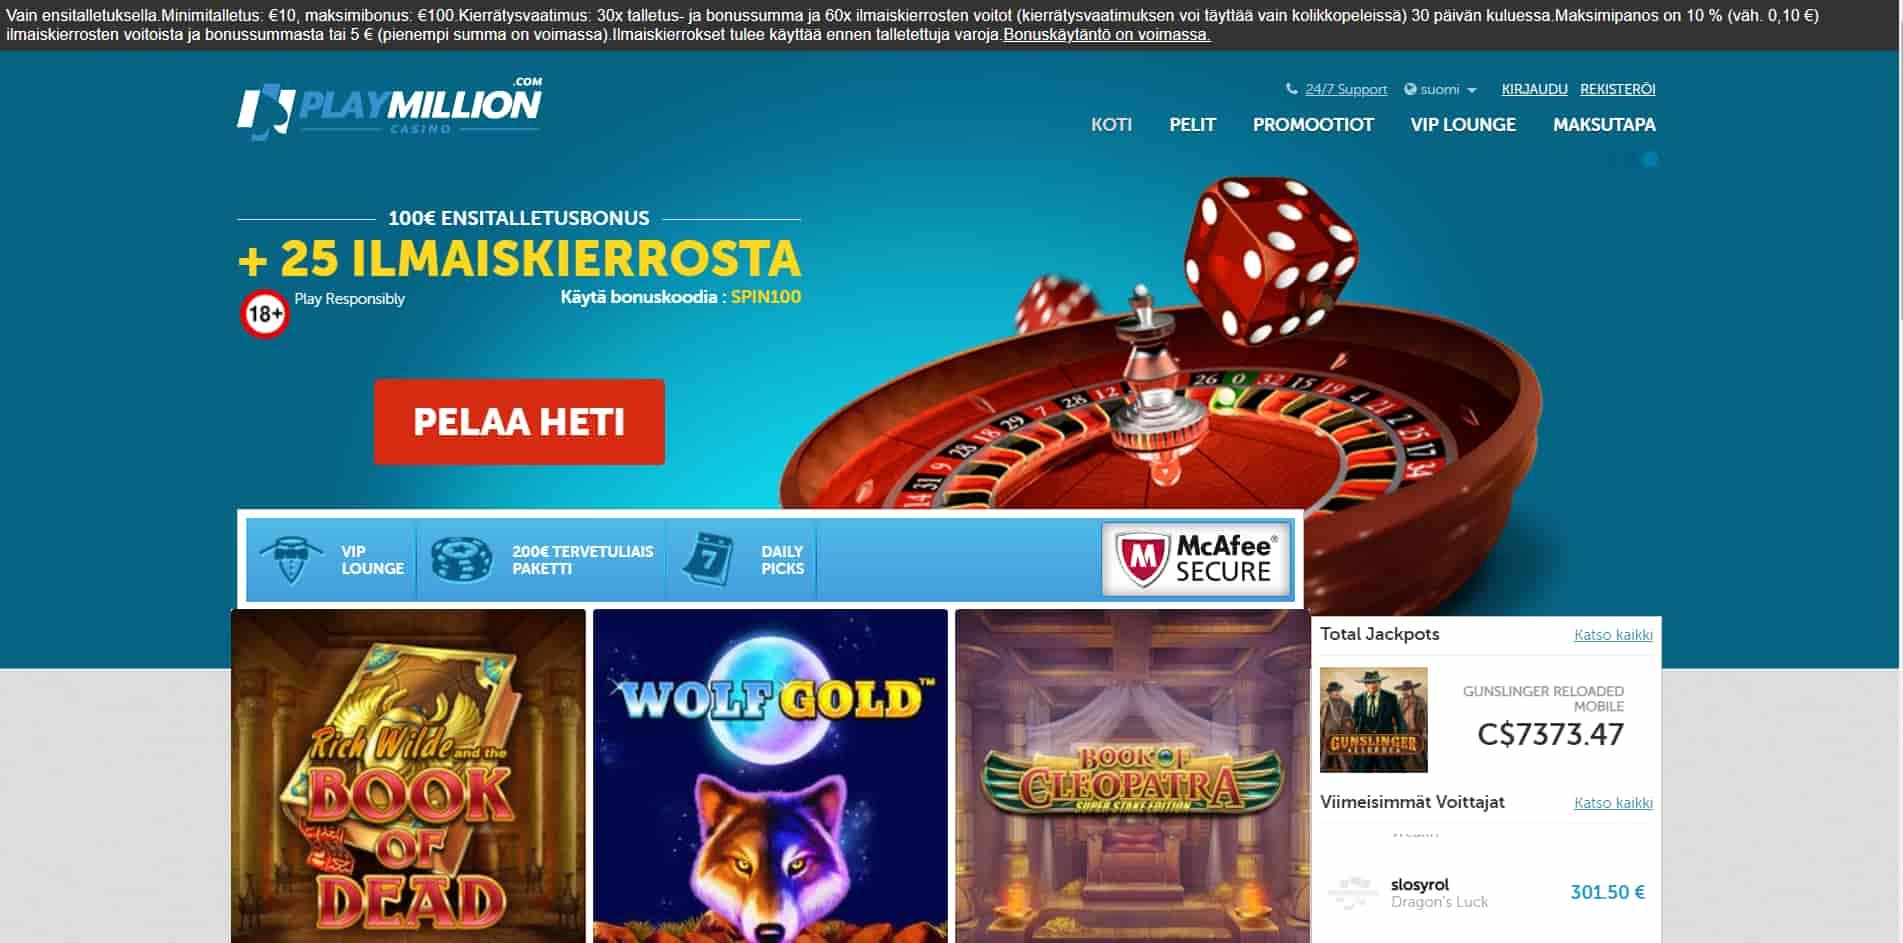 PlayMillion casino homepage